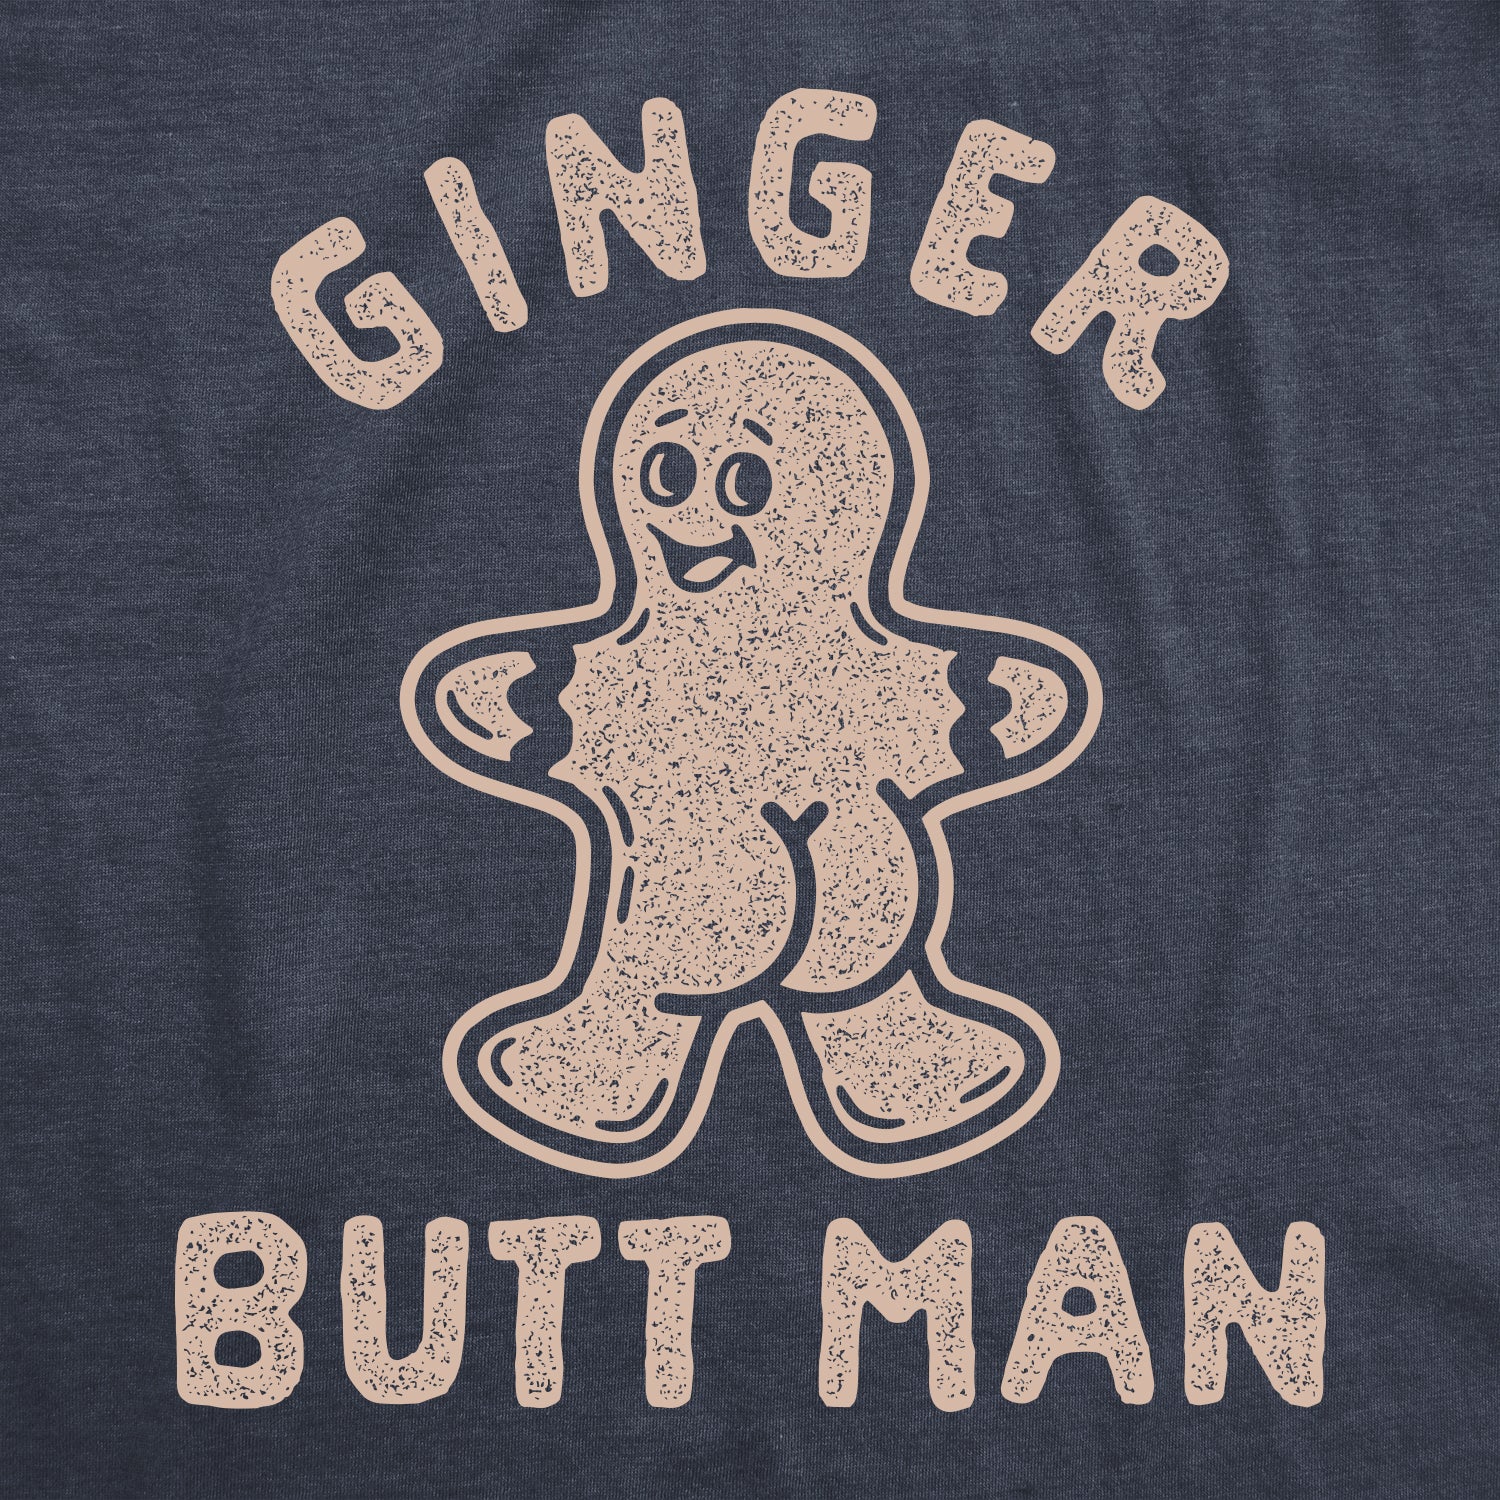 Funny Heather Navy Ginger Butt Man Womens T Shirt Nerdy Christmas Nerdy Tee